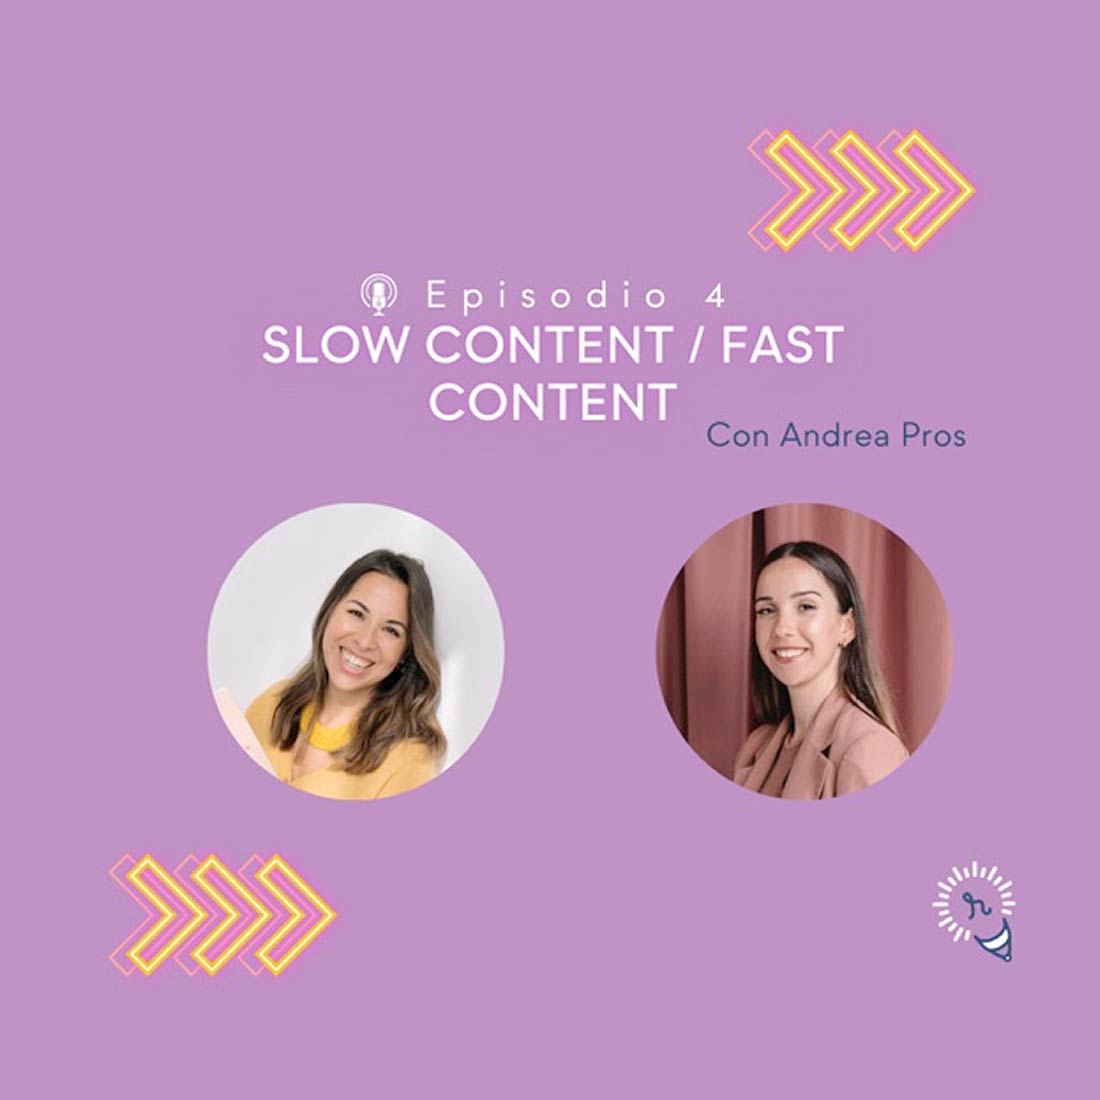 Slow content / Fast Content